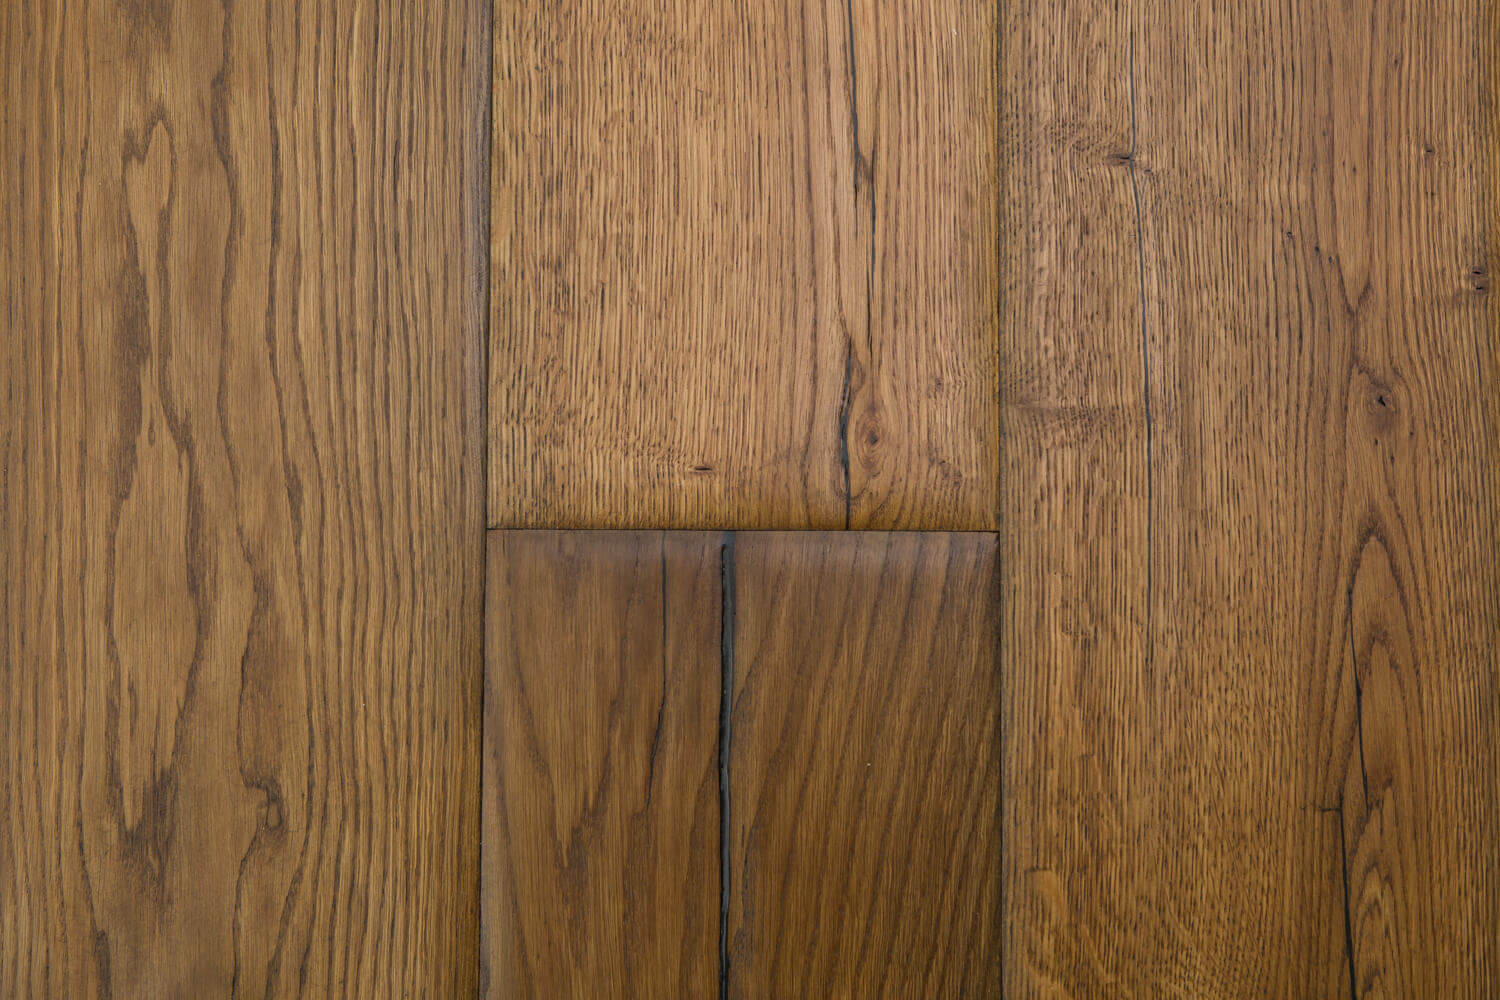 3 Oak Floor Antique Old English, Old English On Laminate Floors